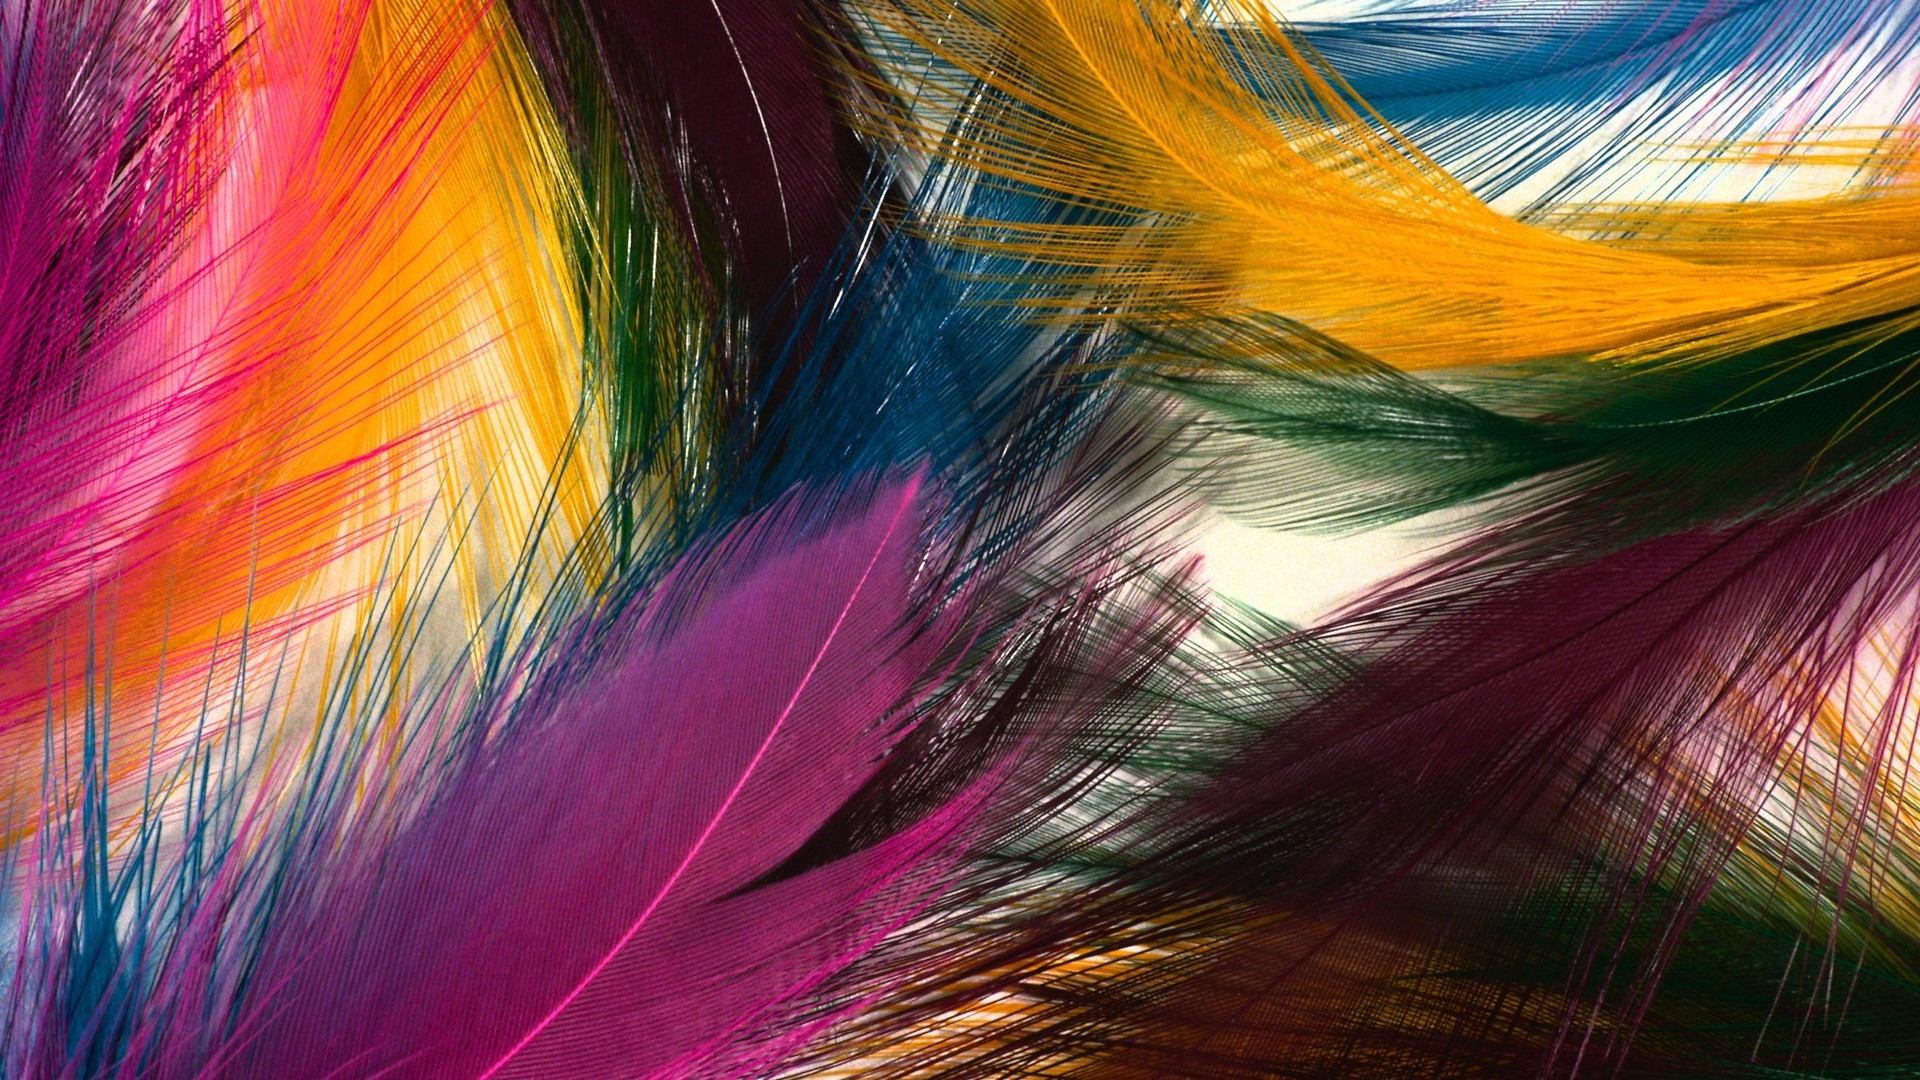 texture abstract wallpaper art design background creativity fractal pattern canvas graphic motion composition artistic blur impression line dynamic vortex light